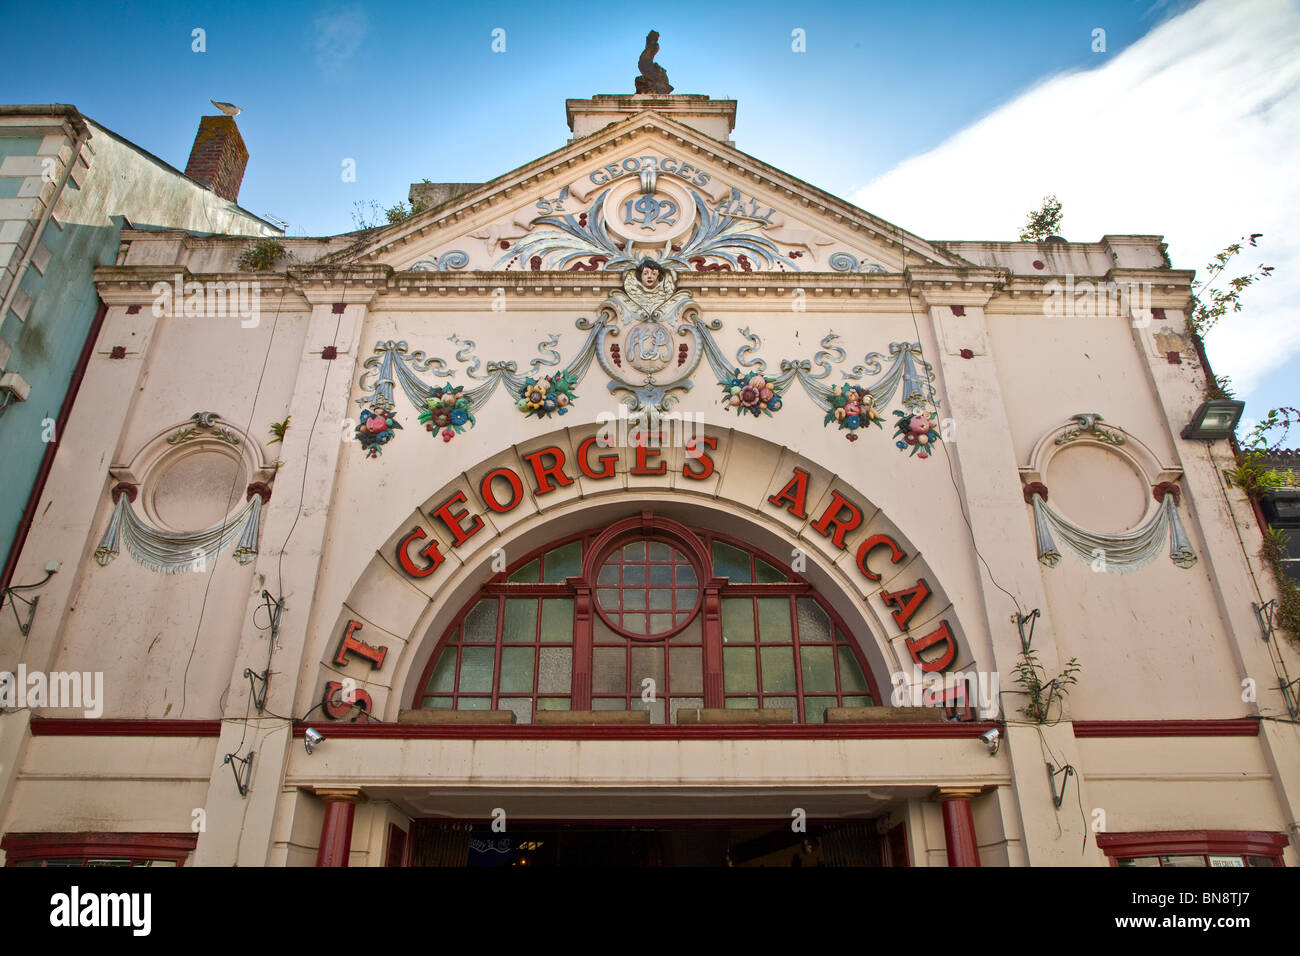 Saint Georges Arcade facade, Falmouth, Cornwall Stock Photo